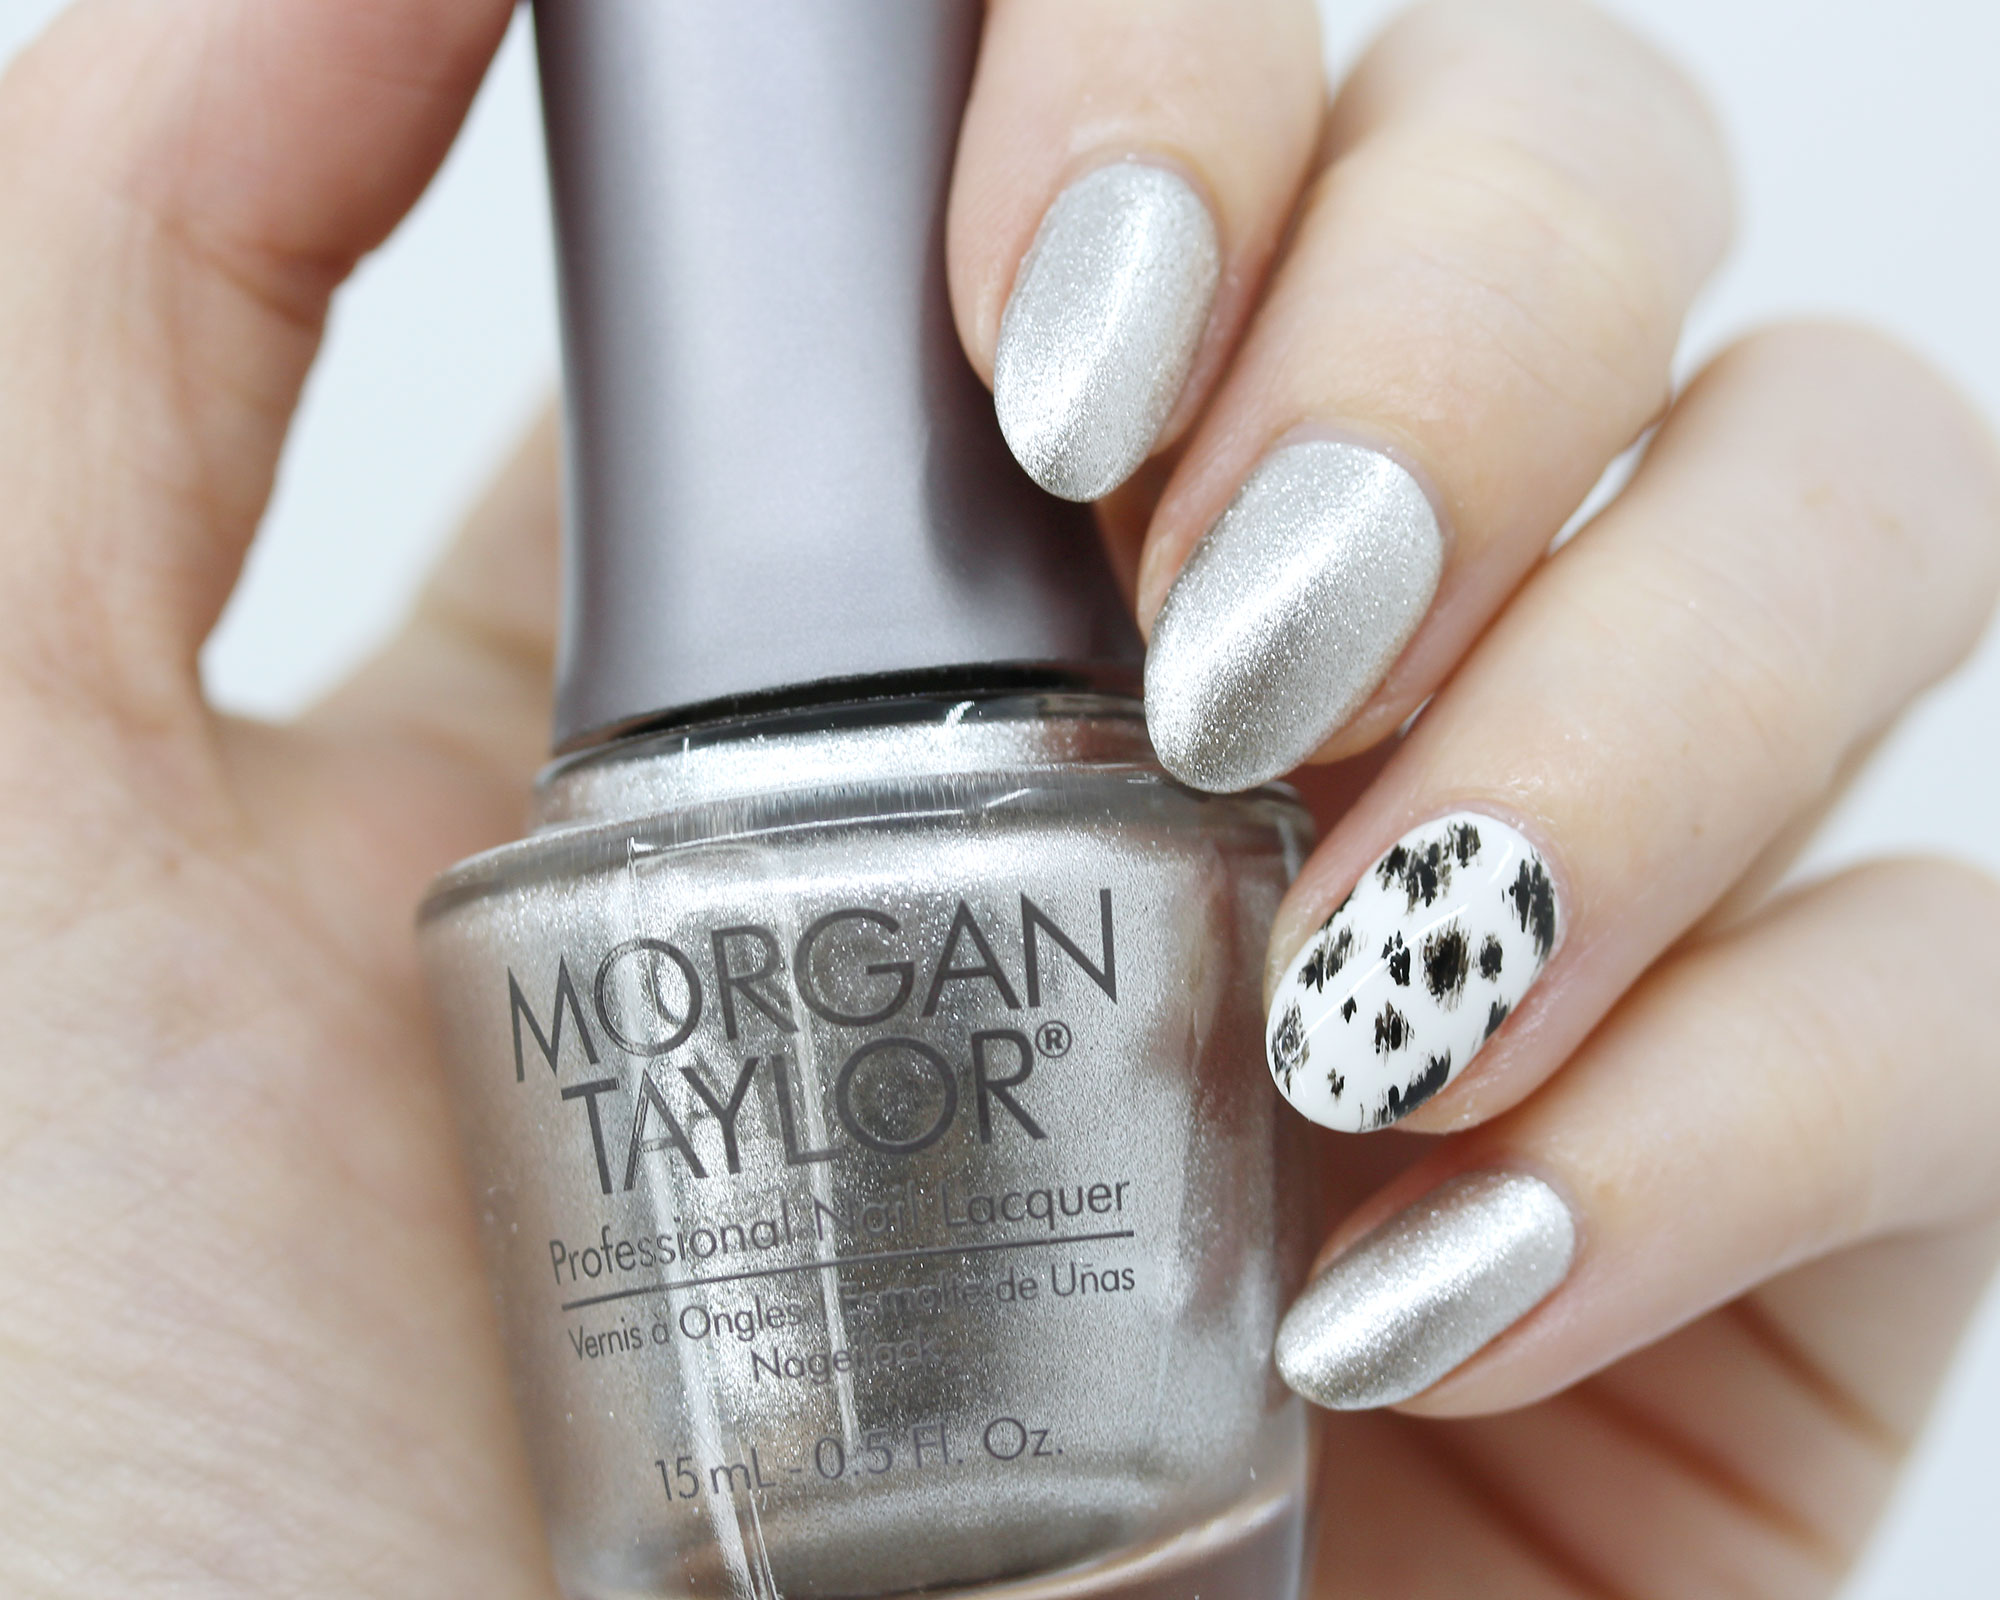 Morgan Taylor Fashion Above All - Disney Cruella de Vil inspired nail polish